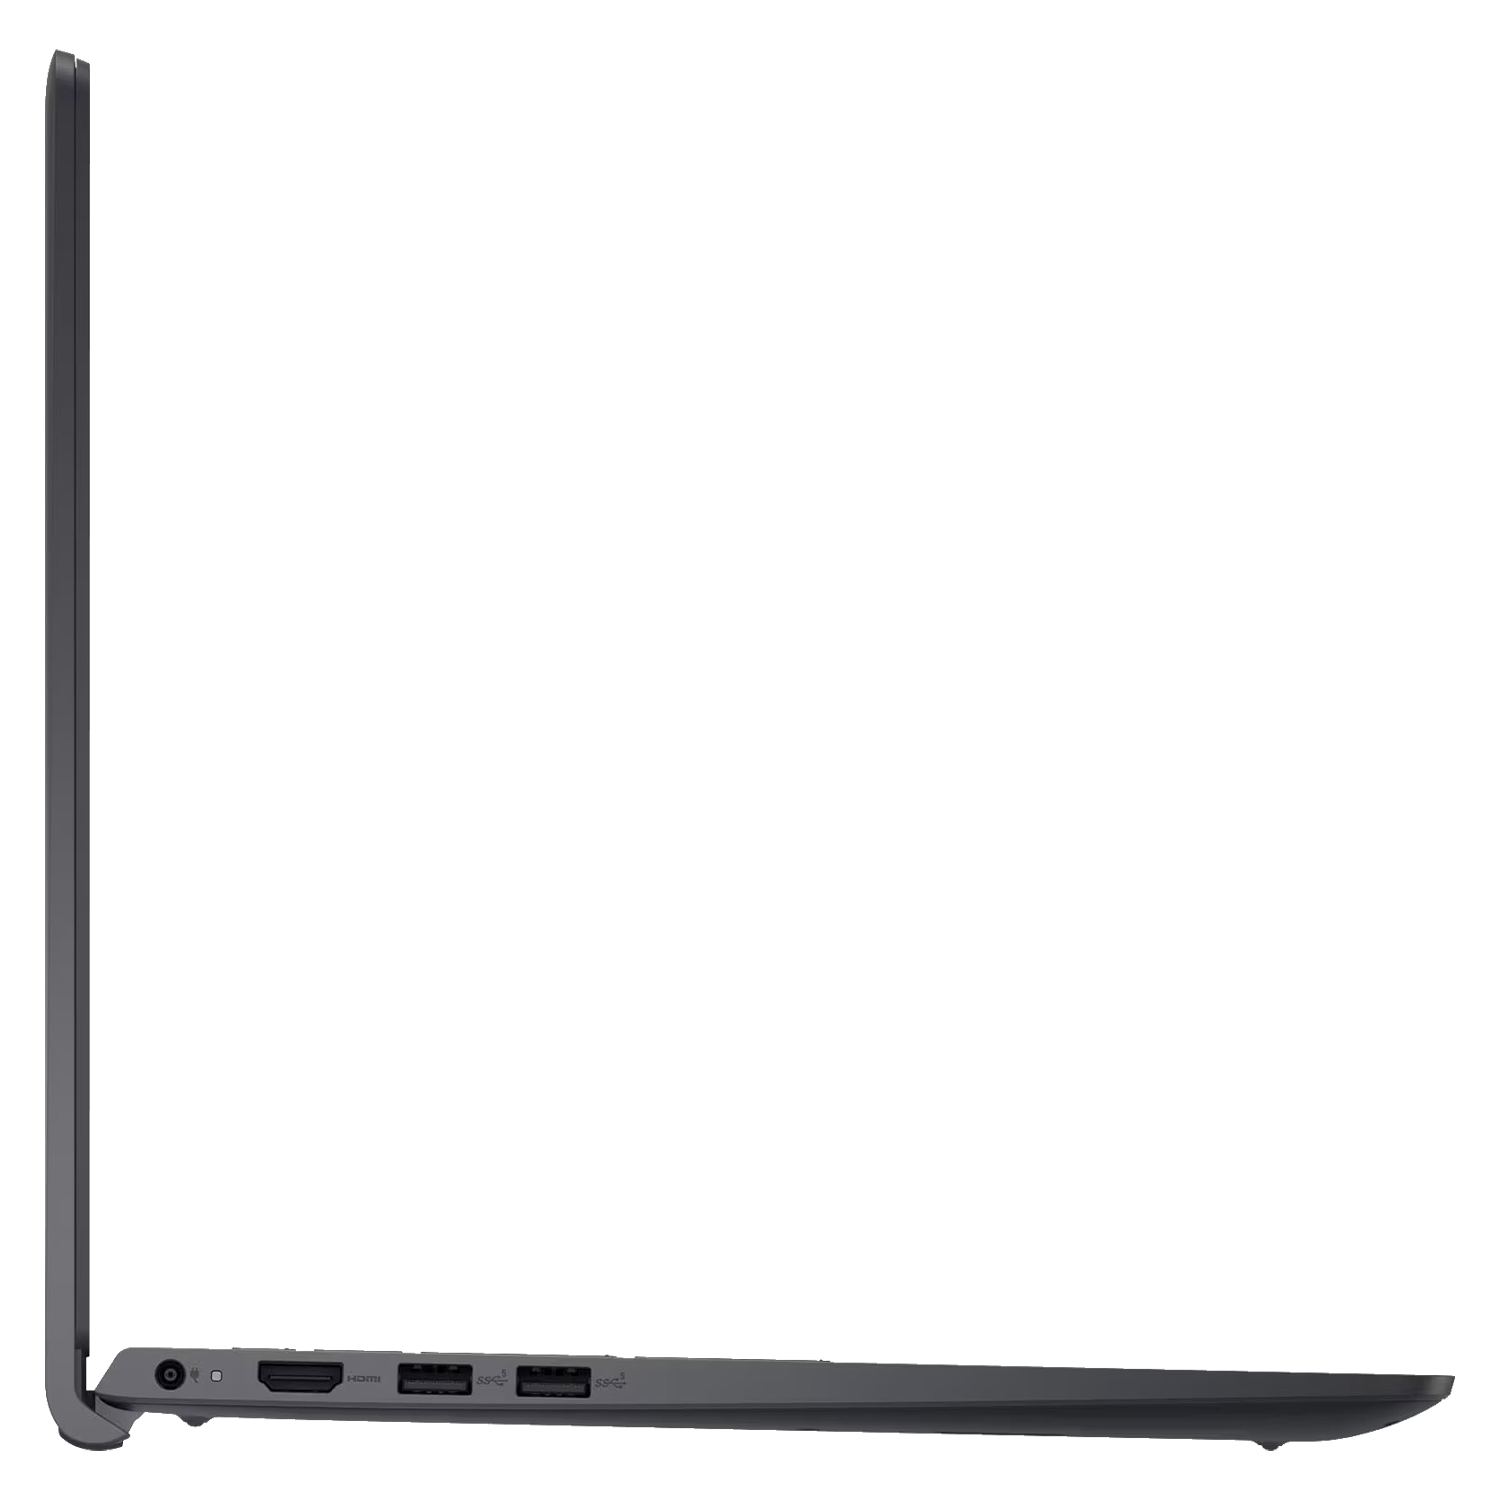 Notebook Dell  Inspiron 15 I3511-5829BLK I5 2.4 8GB RAM / 256SSD / Tela 15.6" / Touch - Preto